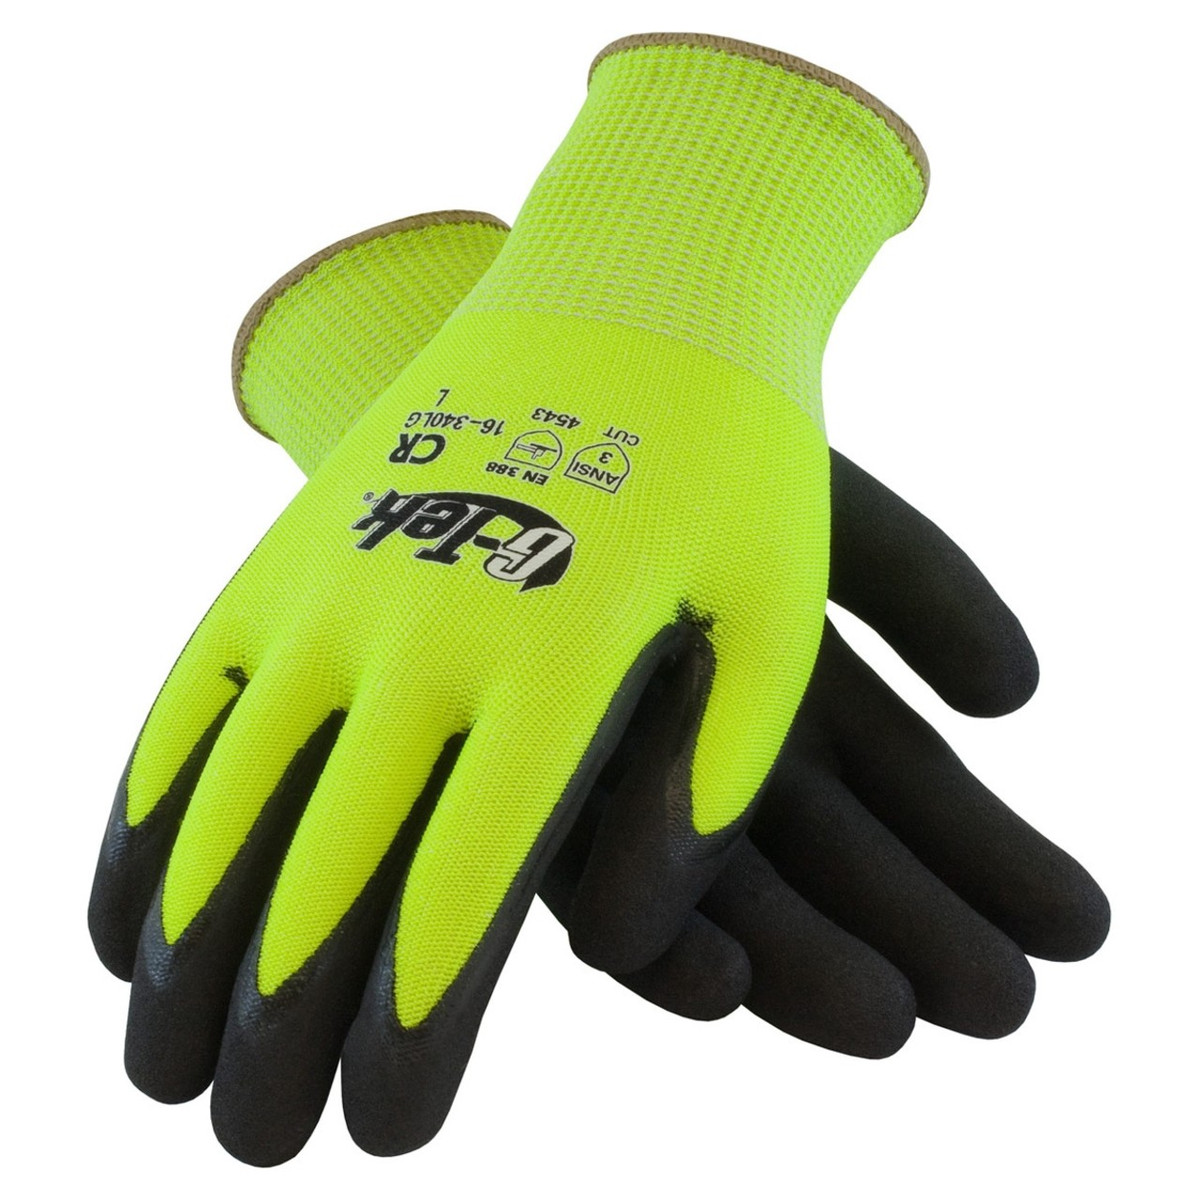 G-Tek PolyKor Hi-Vis A3 Cut Double-Dipped Nitrile Coated Gloves - 16-340